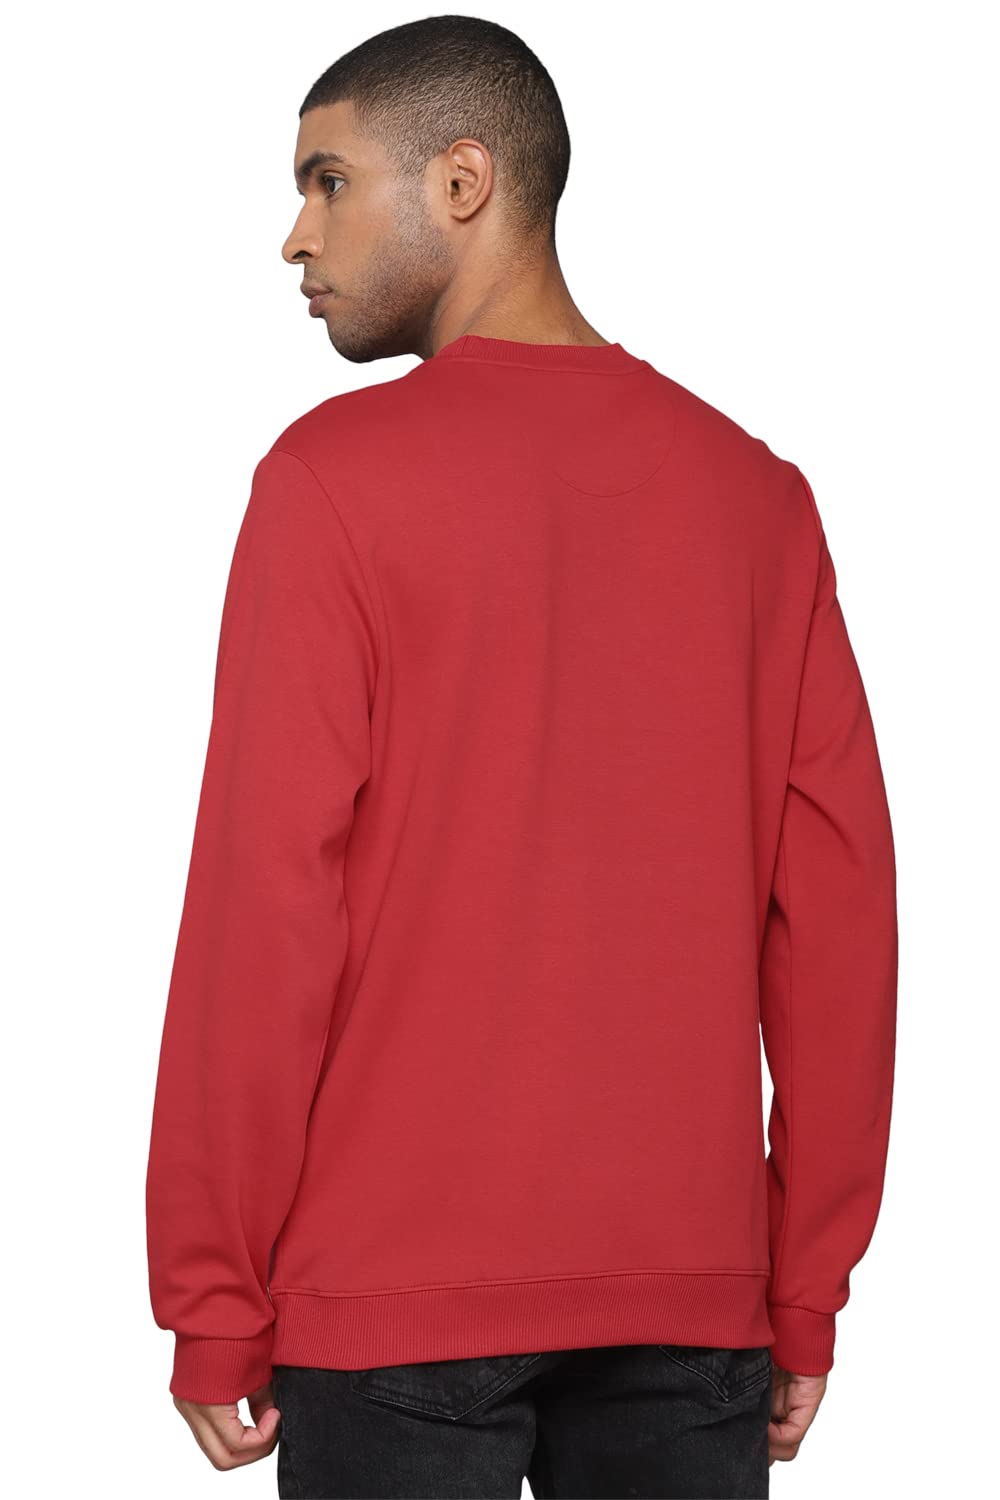 Allen Solly Men's Cotton Crew Neck Sweatshirt (ASSTCRGFD20772_Red_L) 